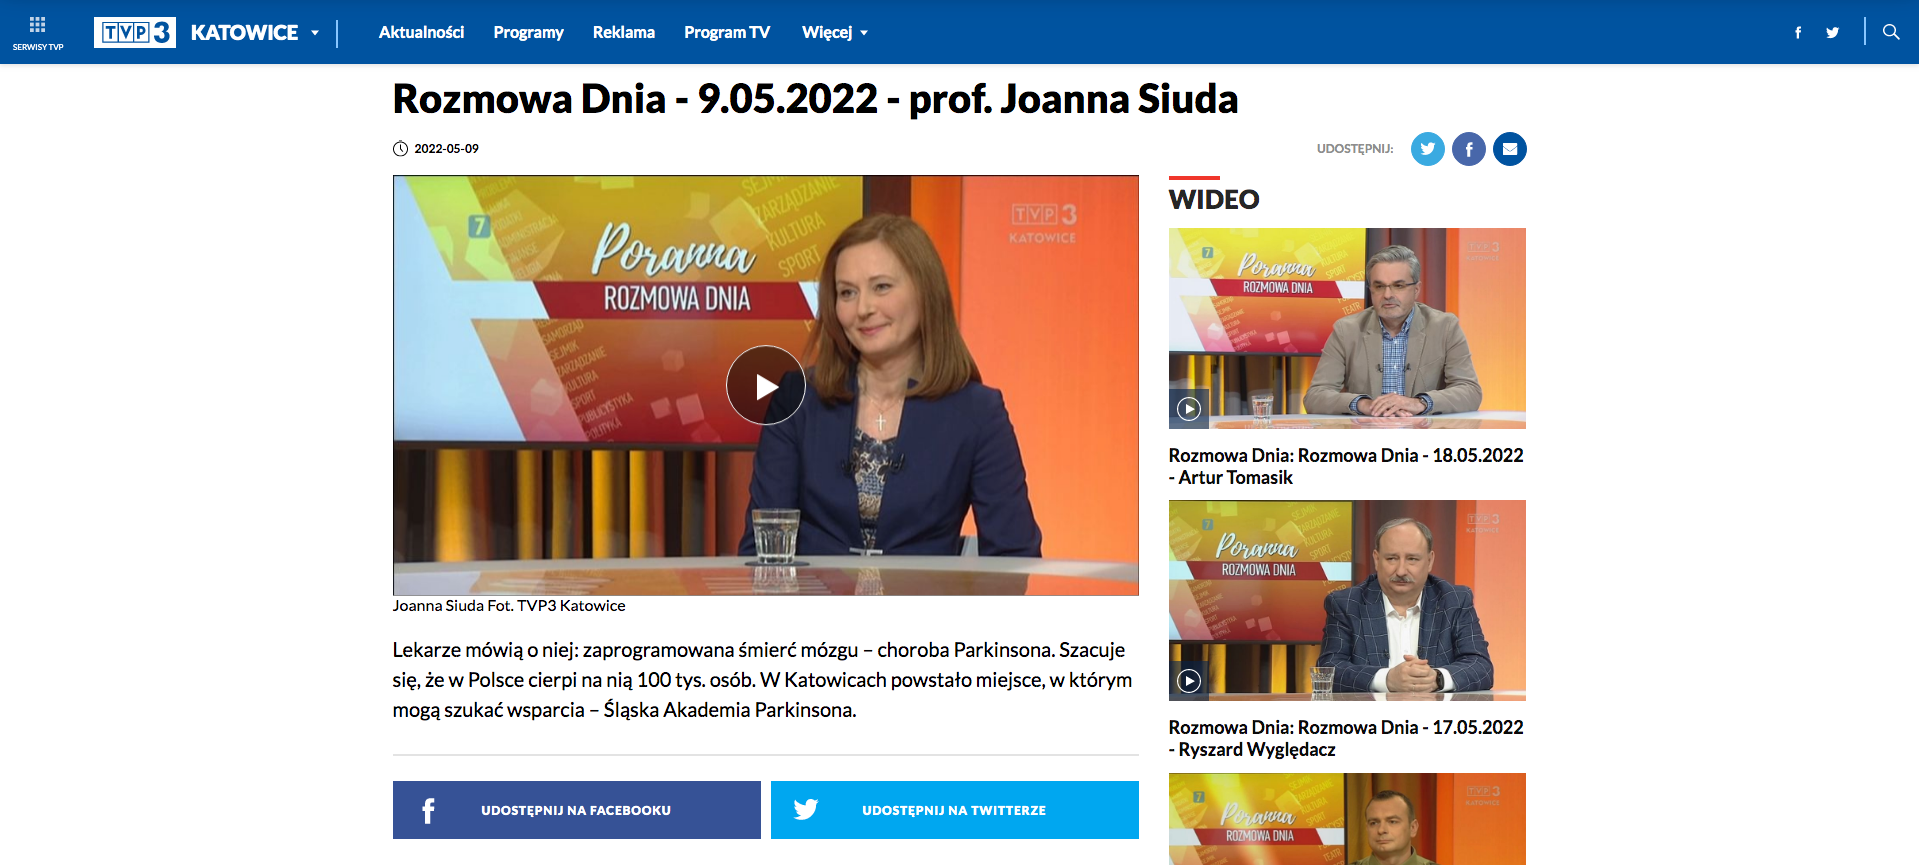 TVP3 Katowice - Rozmowa Dnia - 9.05.2022 - prof. Joanna Siuda